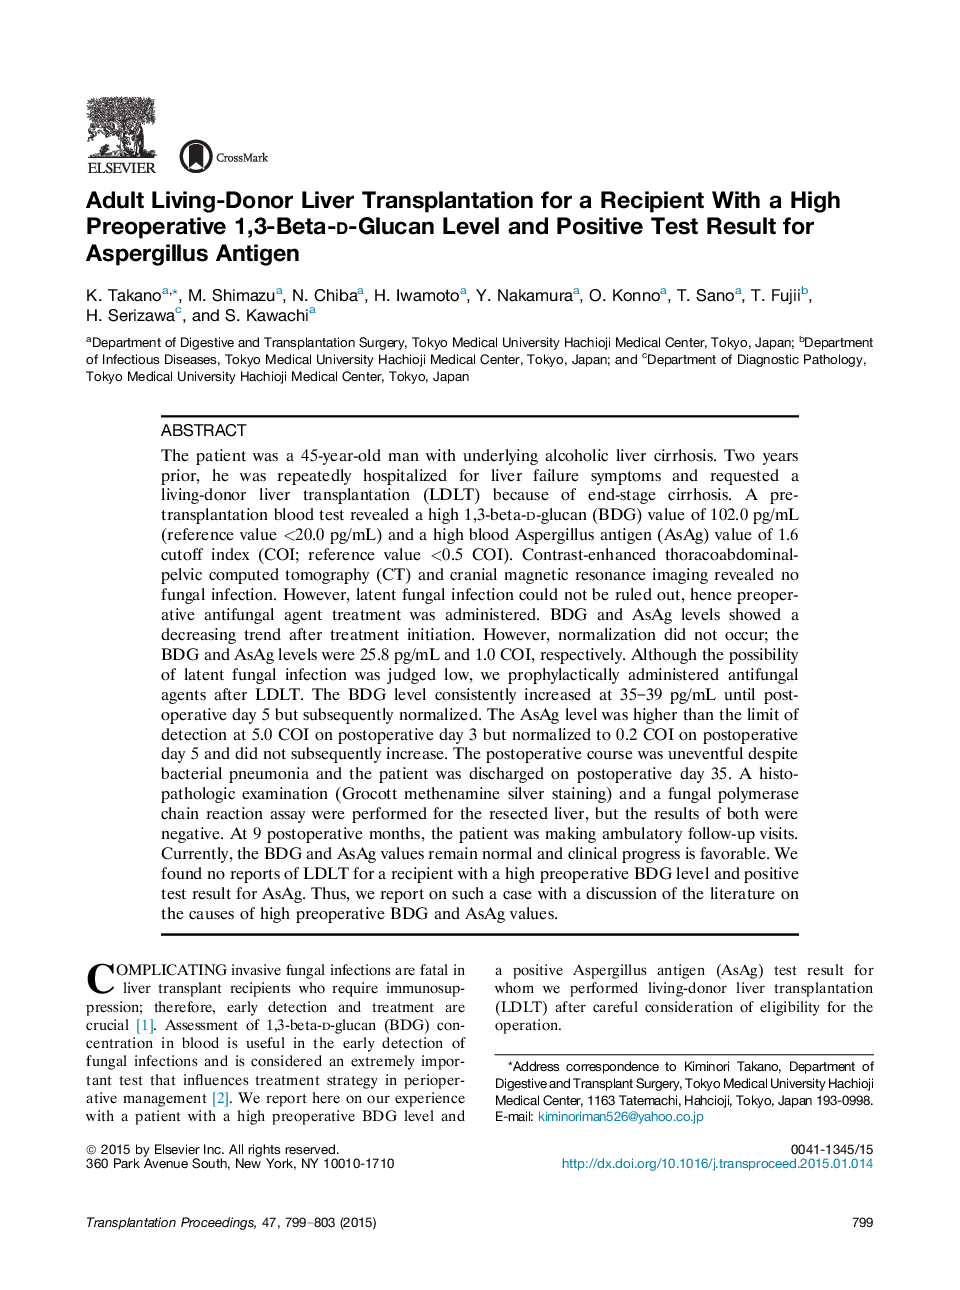 Original contributions: Case reports in transplantationLiverAdult Living-Donor Liver Transplantation for a Recipient With a High Preoperative 1,3-Beta-d-Glucan Level and Positive Test Result for Aspergillus Antigen